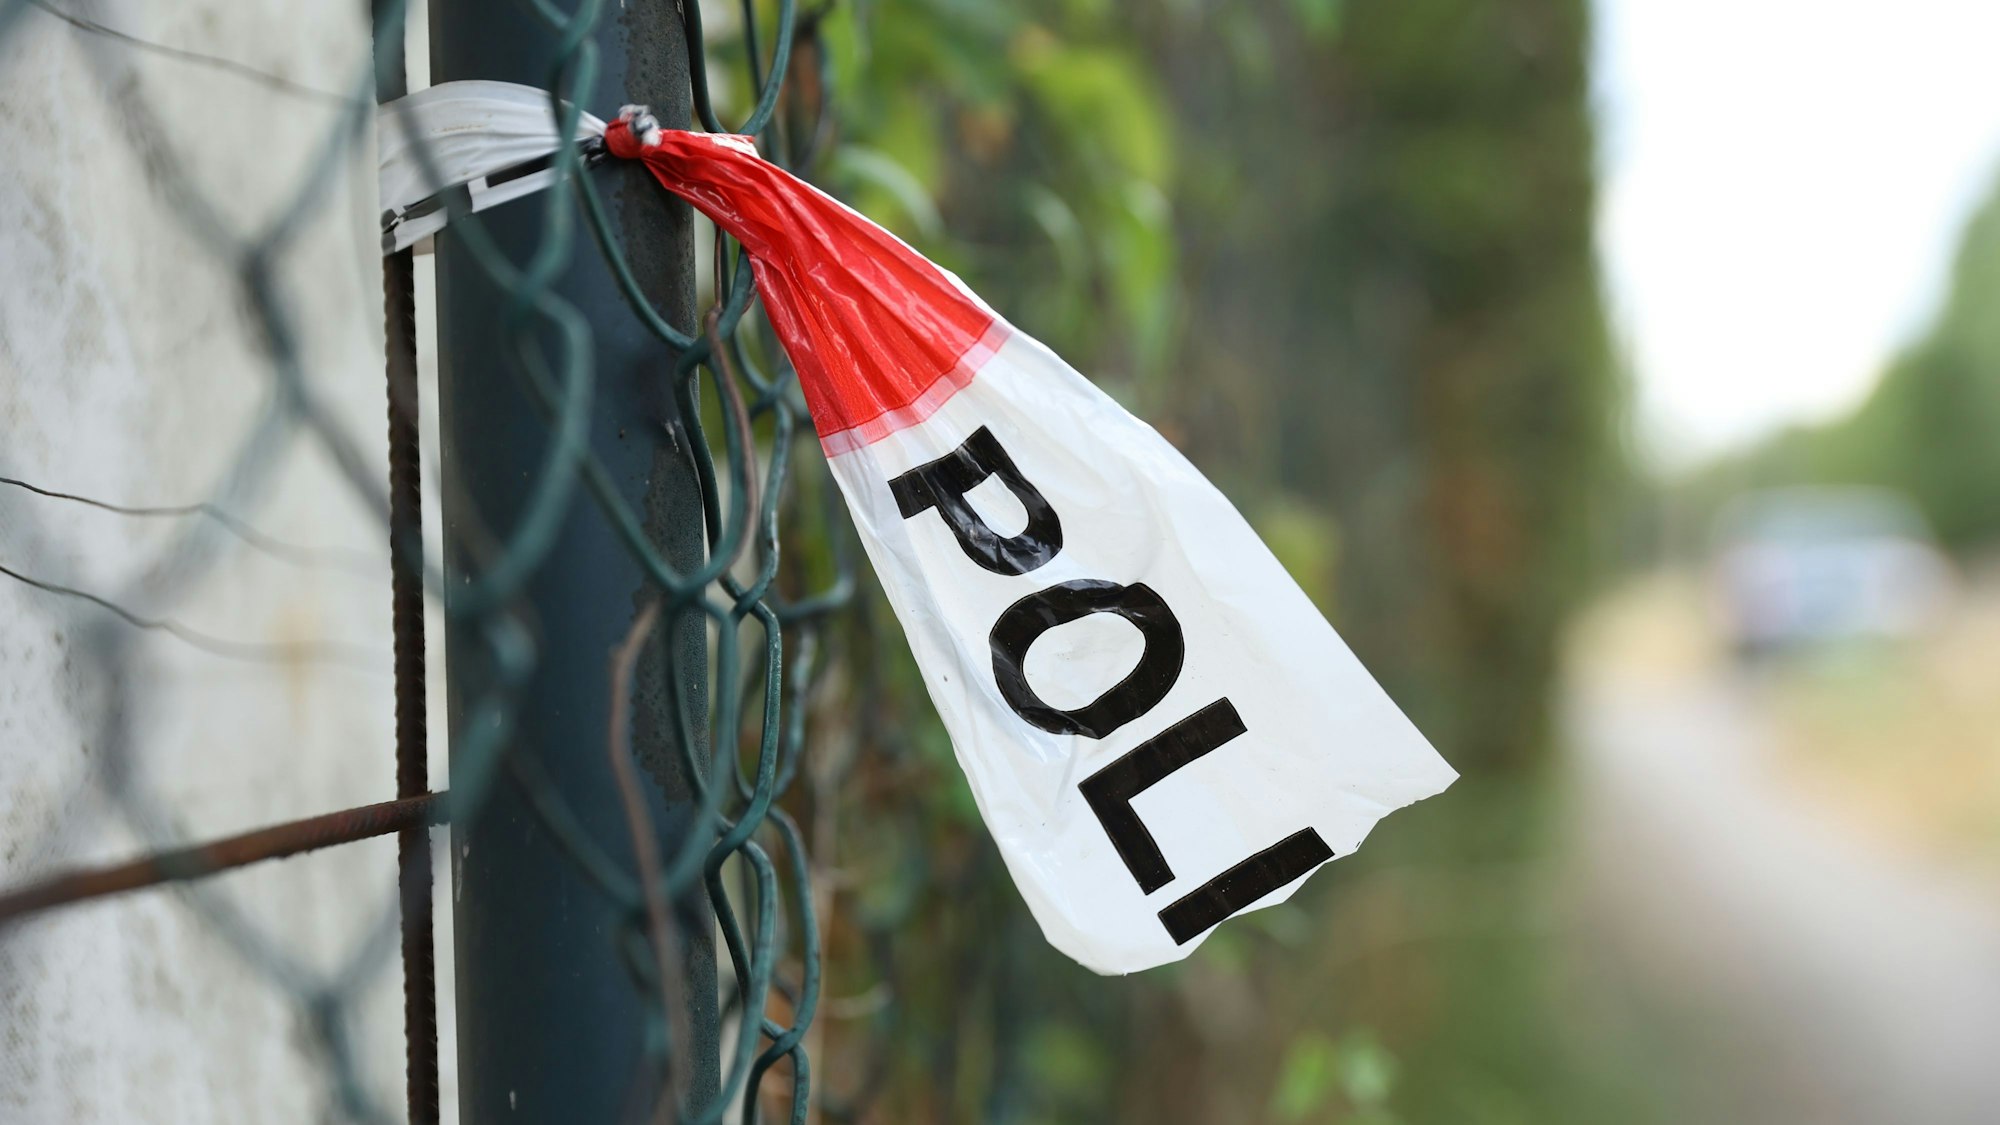 Symbolbild
Polizeiabsperrband an Zaunt

